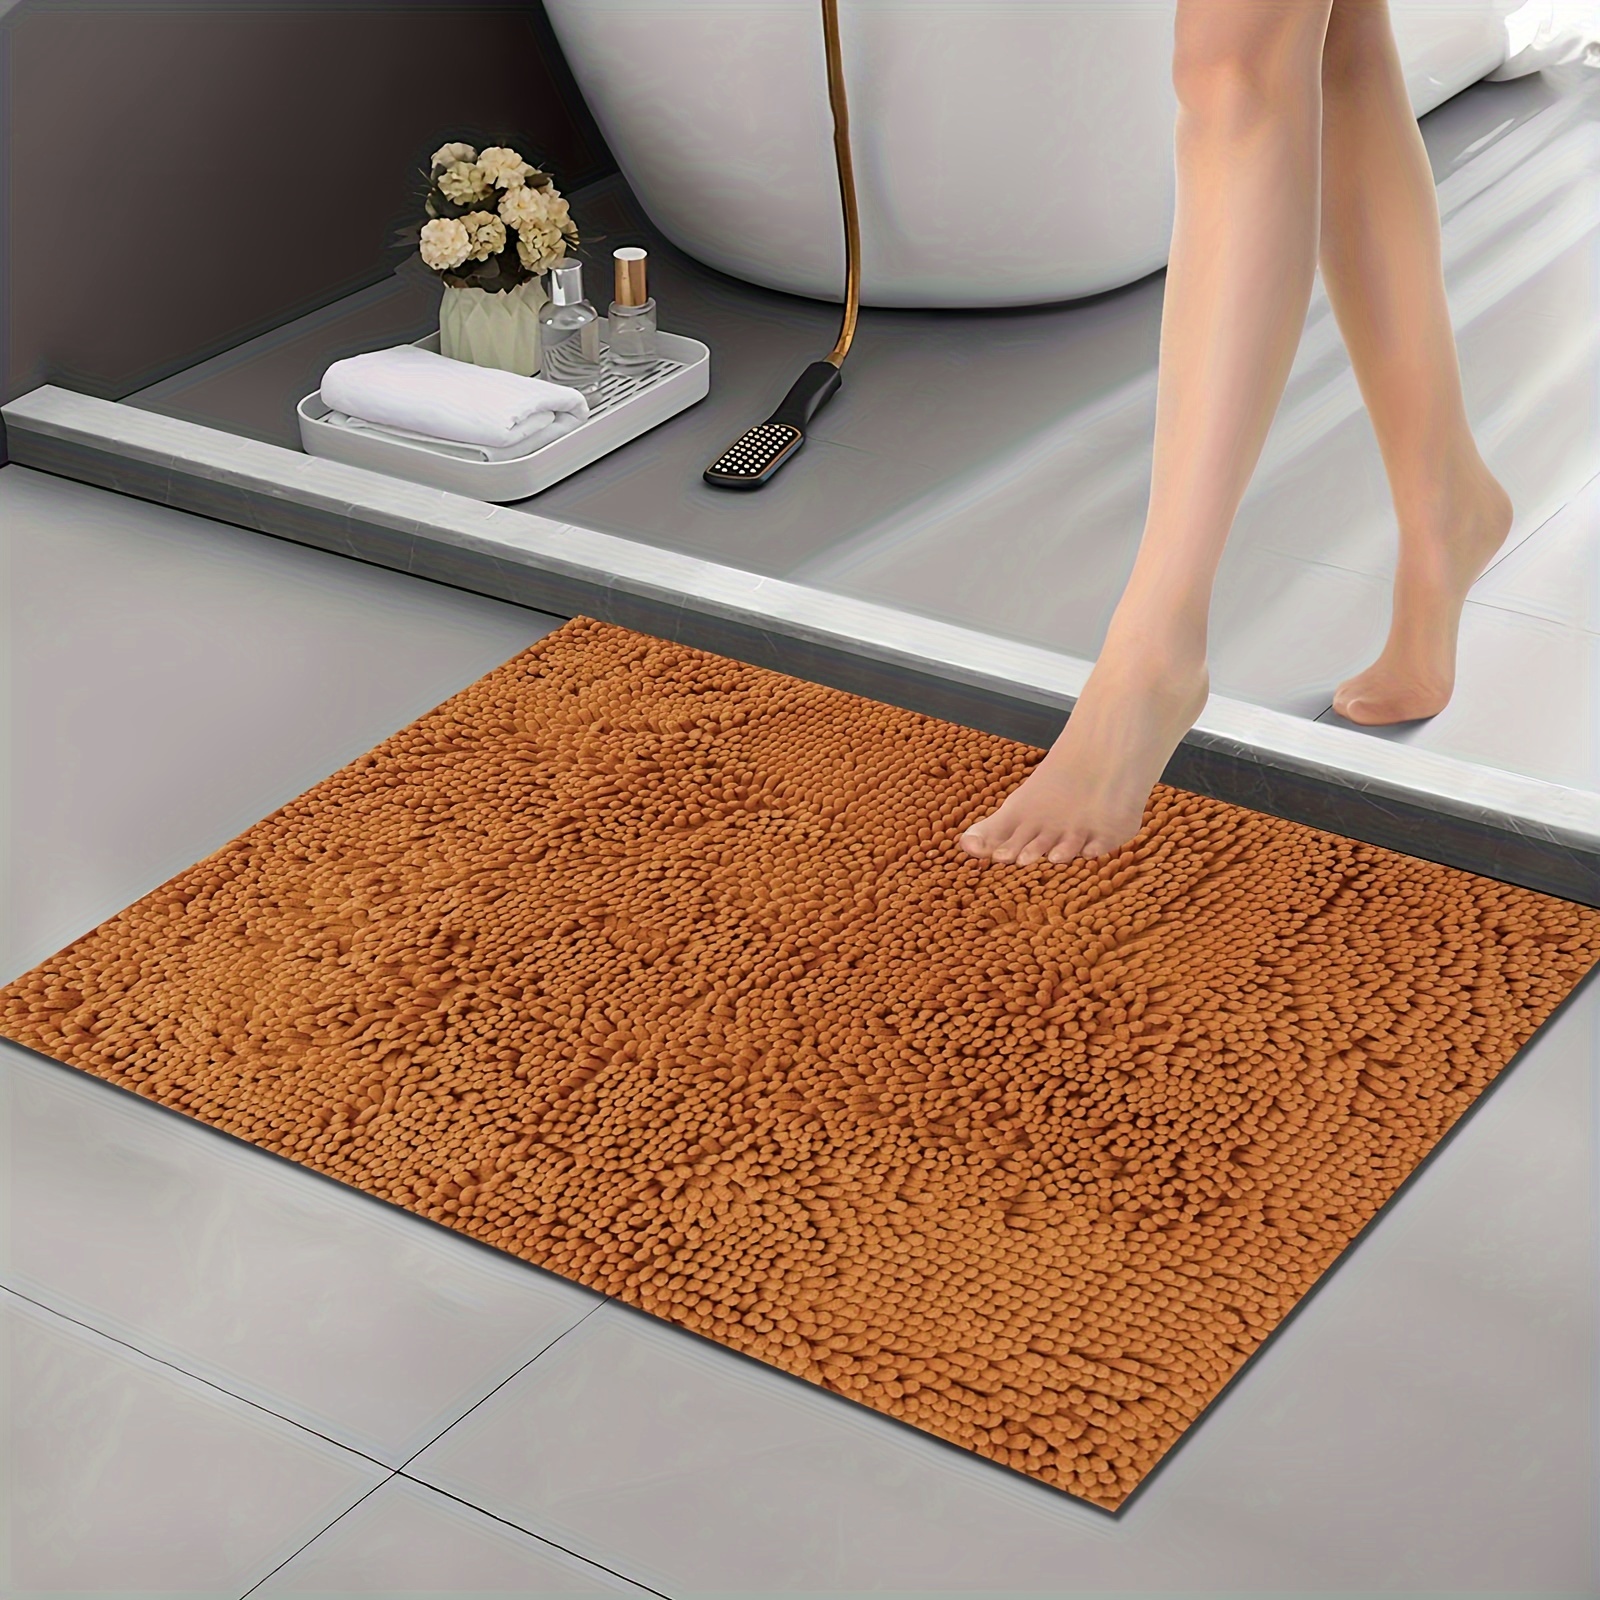 Soft Absorbent Carpet Bathroom Shower Non-slip Bath Mats for Bathtub Mildew  Resistant Bathroom Decor Floor Mat Home Accessories